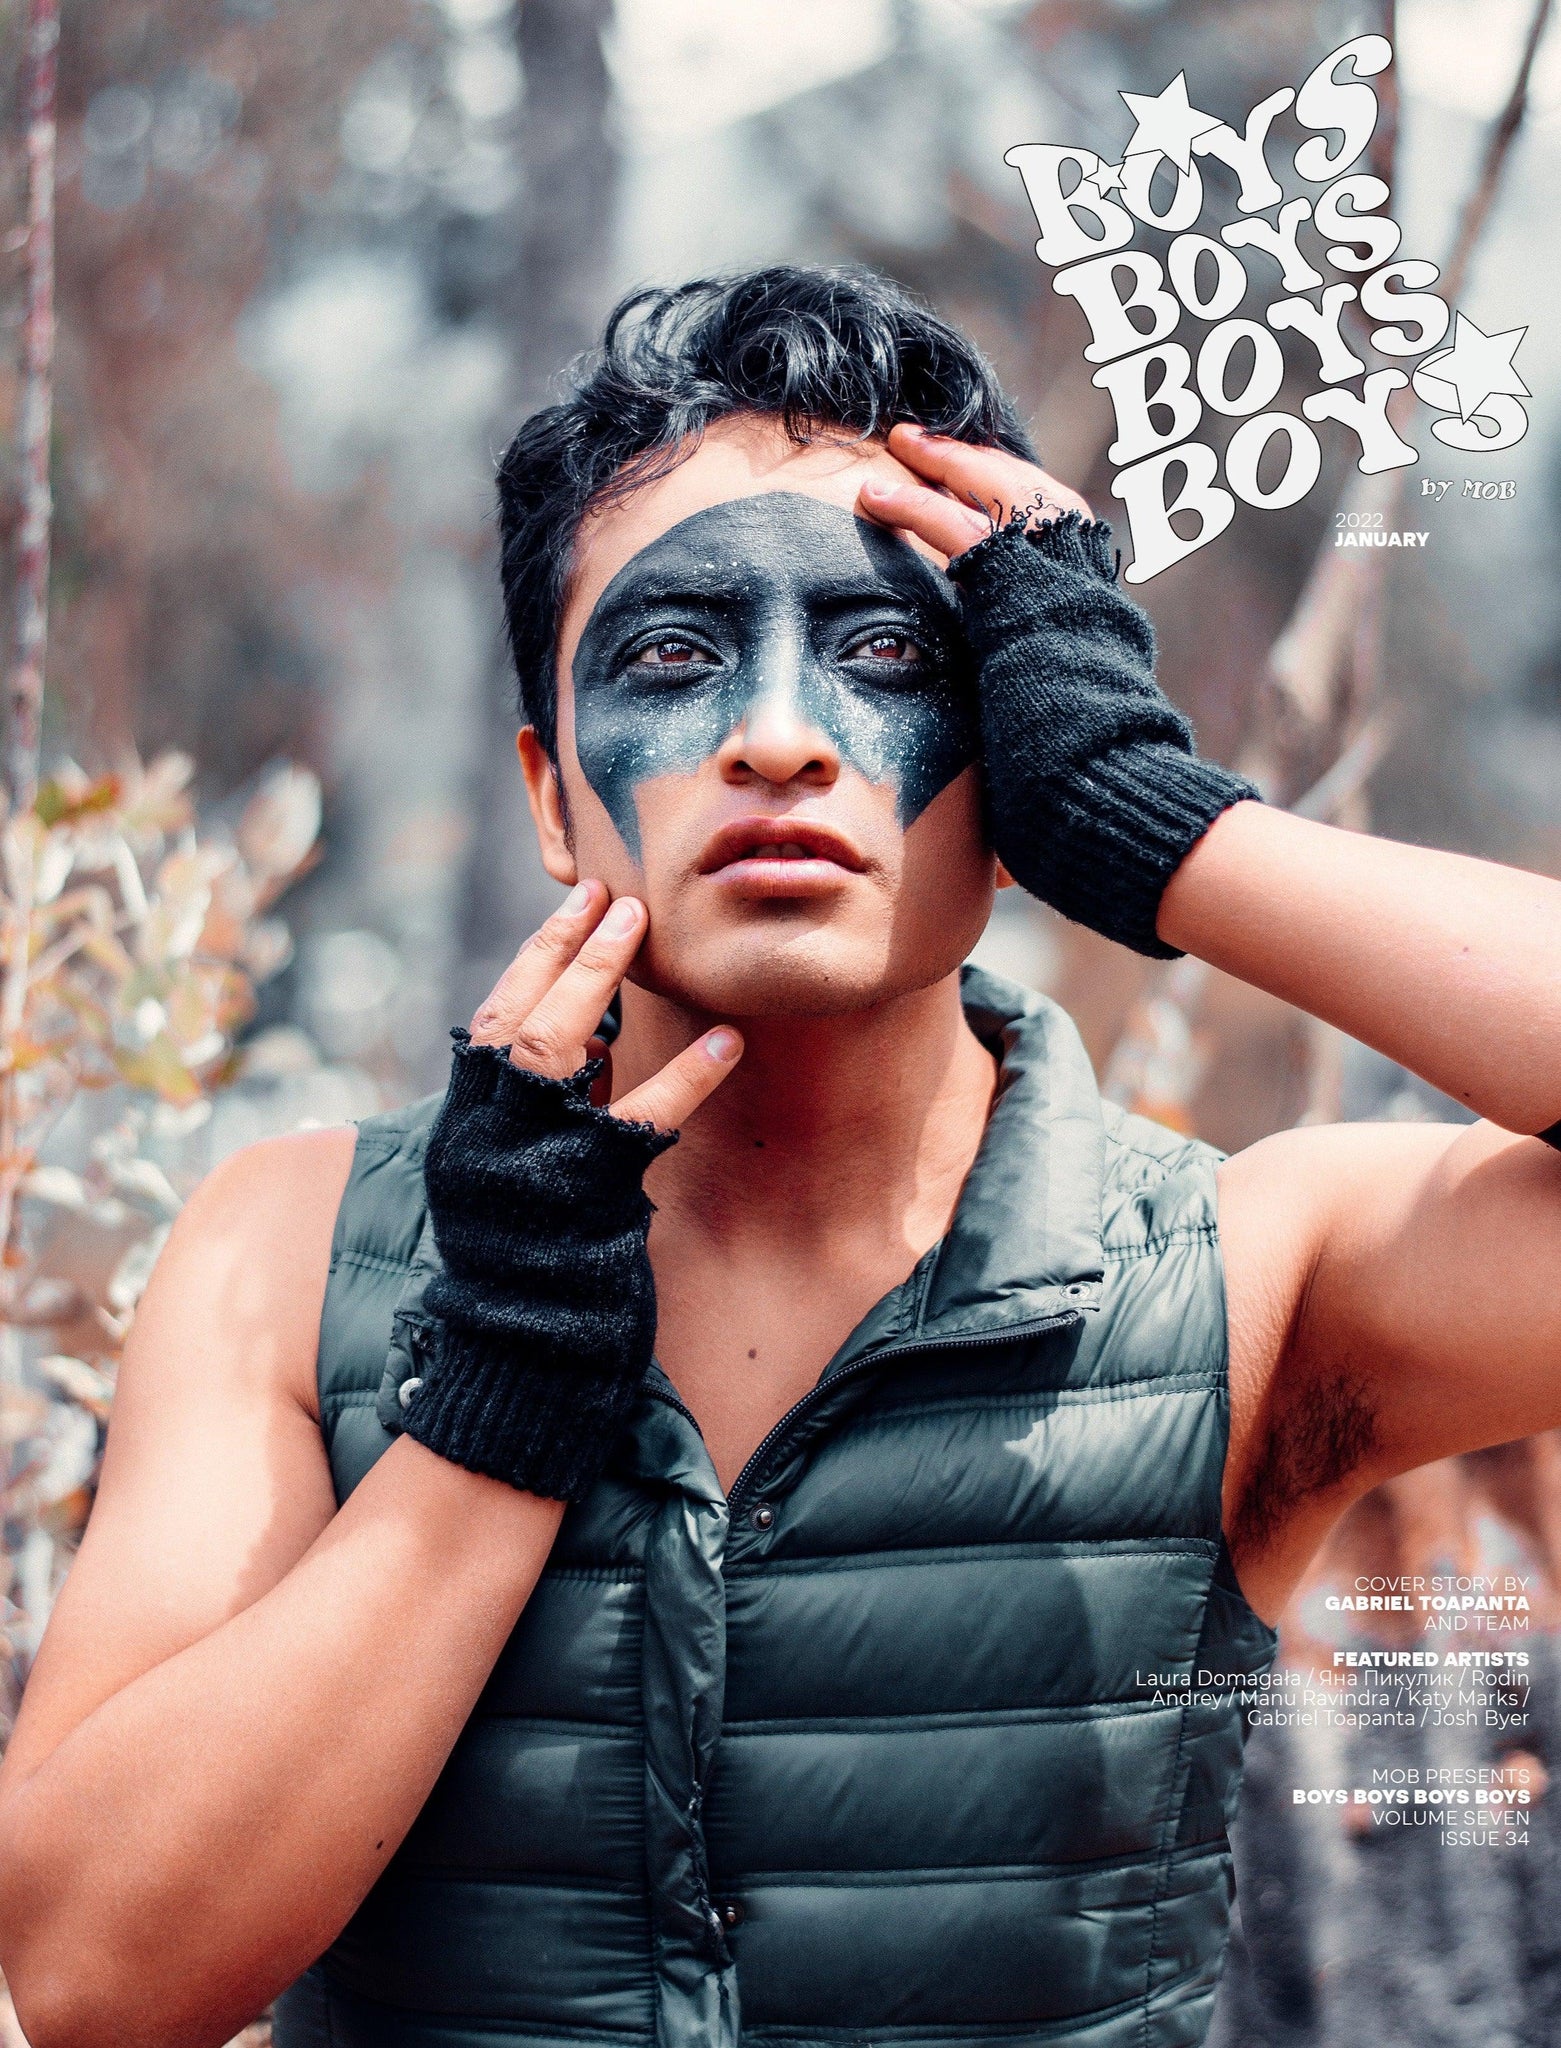 BOYS BOYS BOYS BOYS | VOLUME SEVEN | ISSUE #34 - Mob Journal